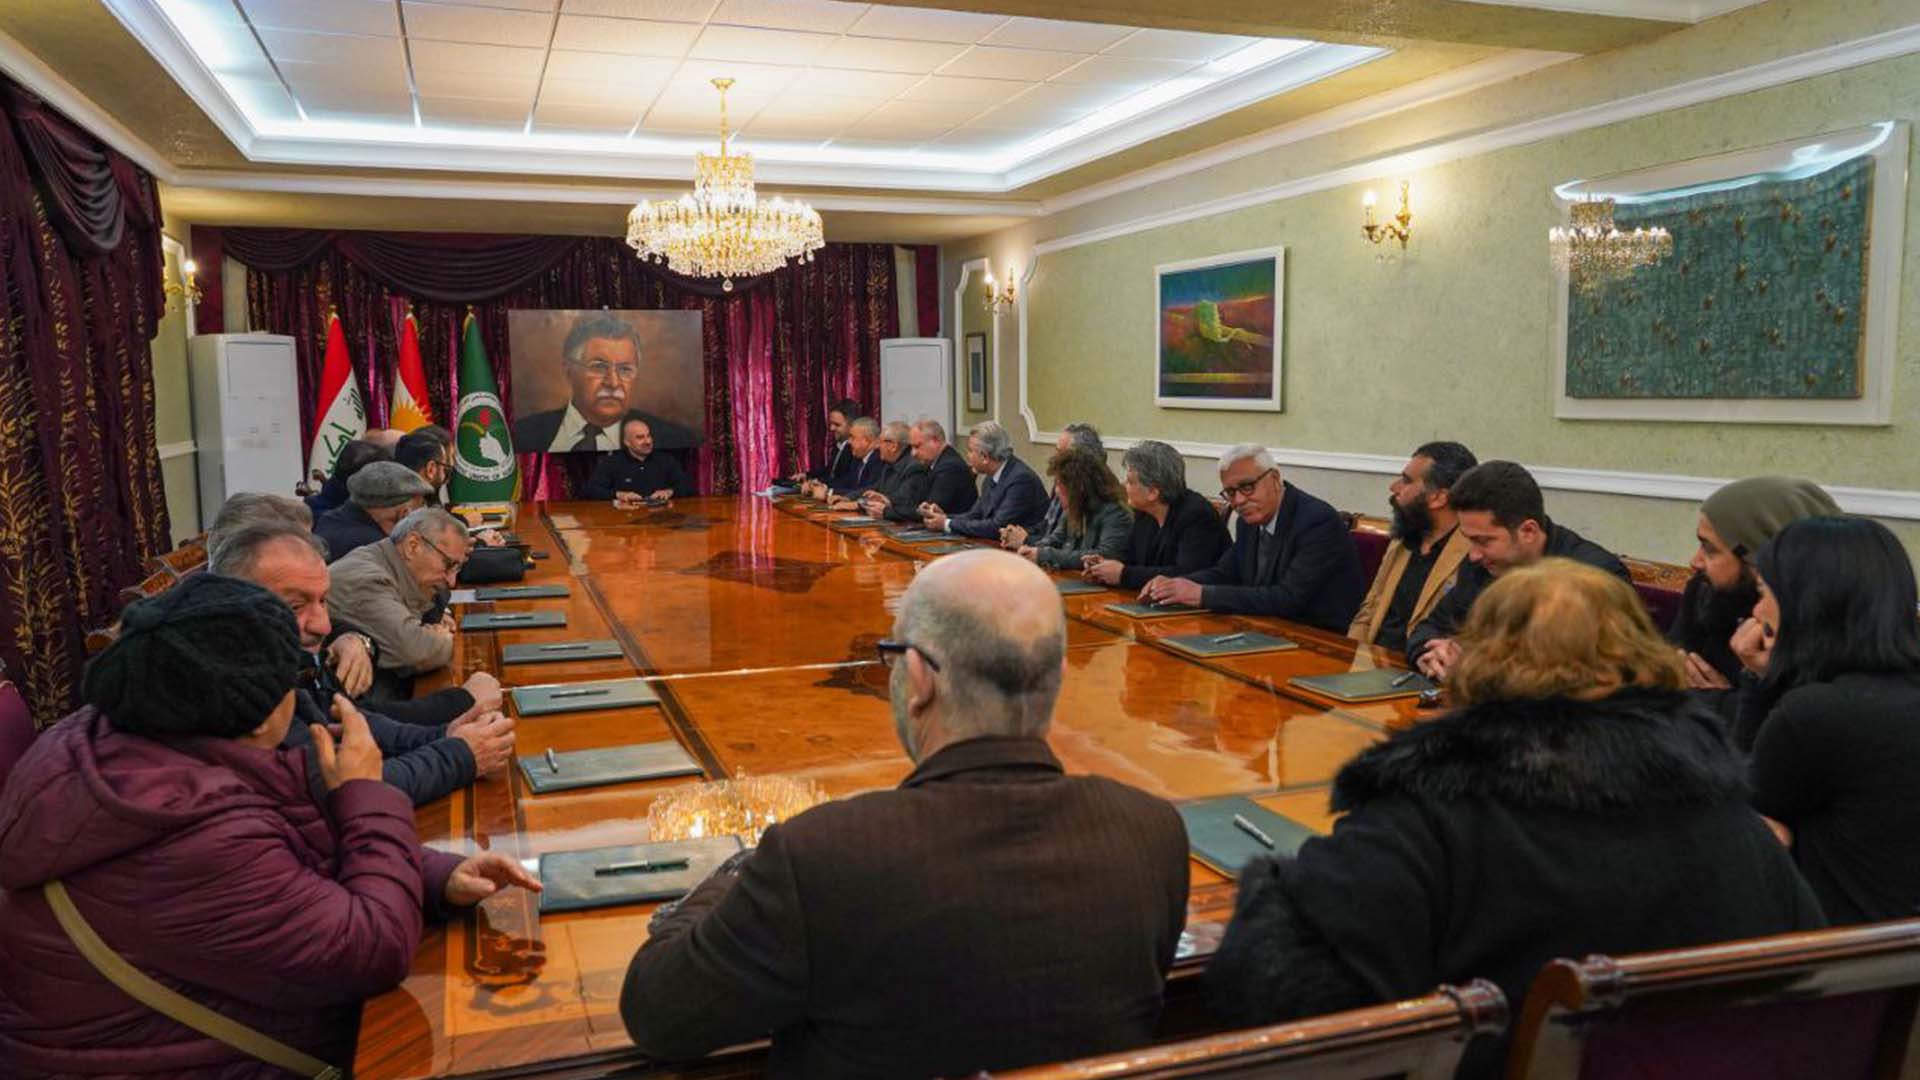  President Bafel meets with several Kurdish artists in Dabashan.